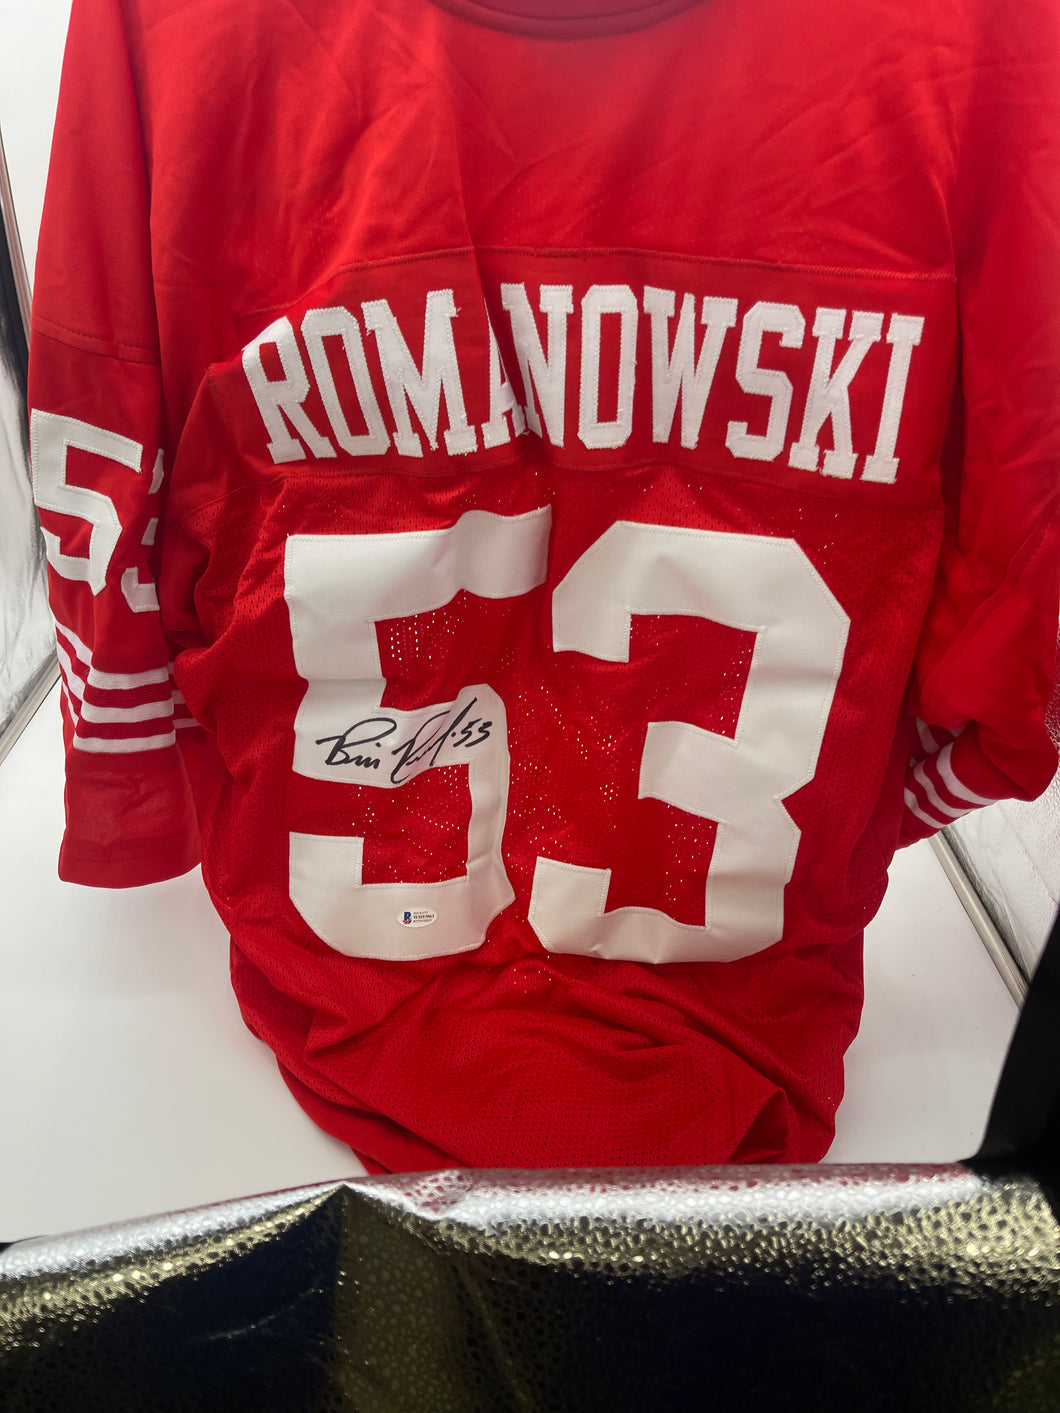 Bill Romanowski signed jersey